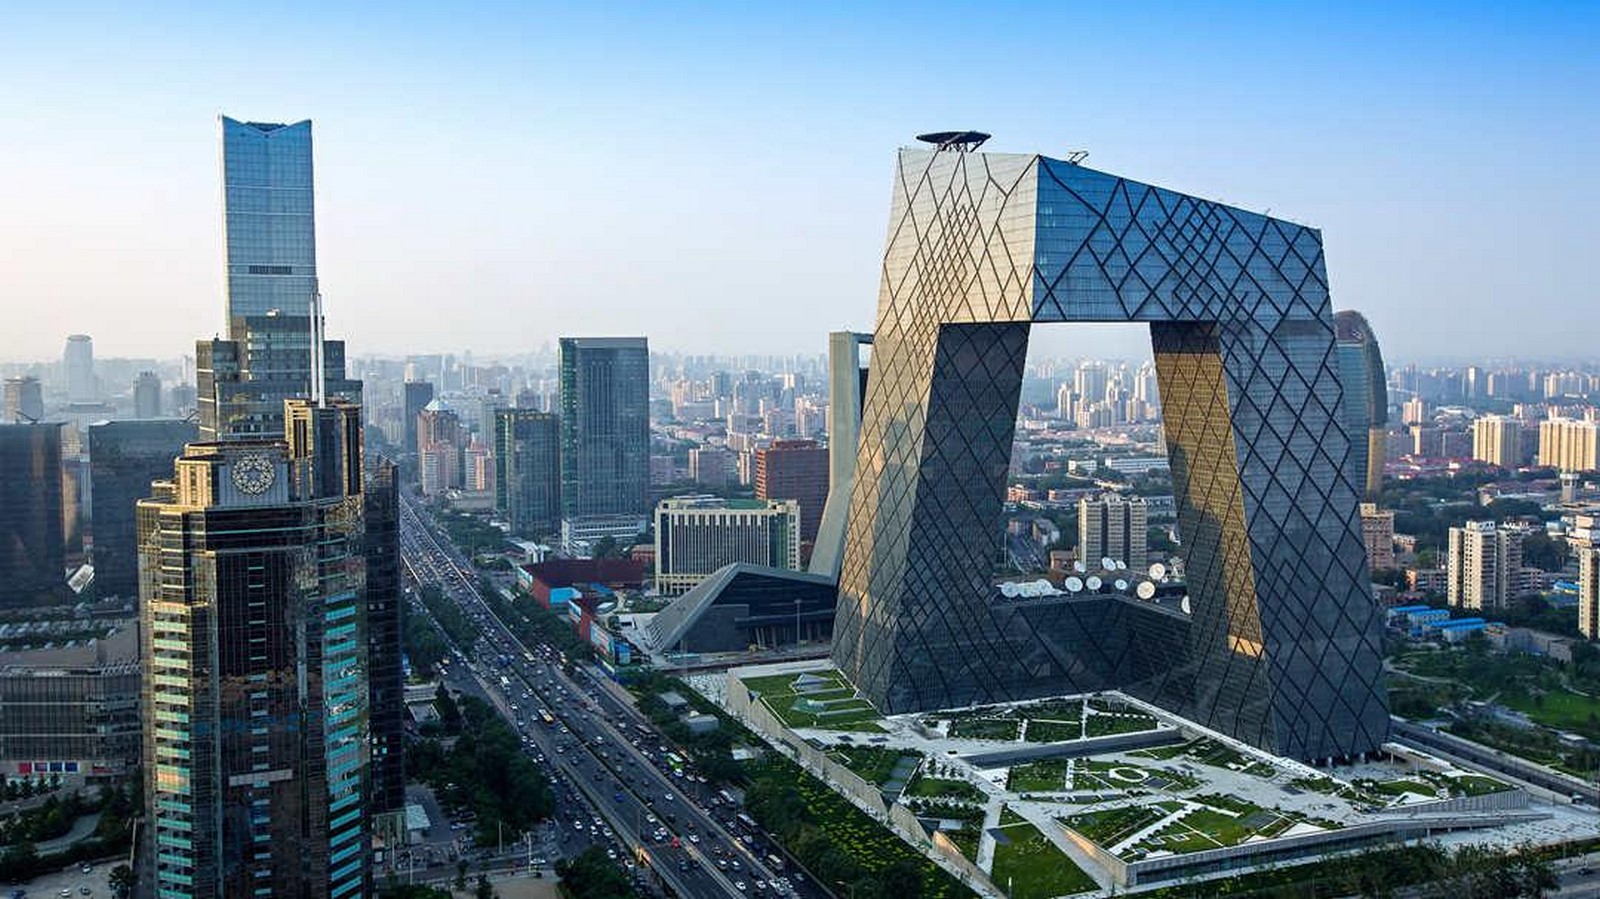 Architectural development of Beijing, China - Sheet1